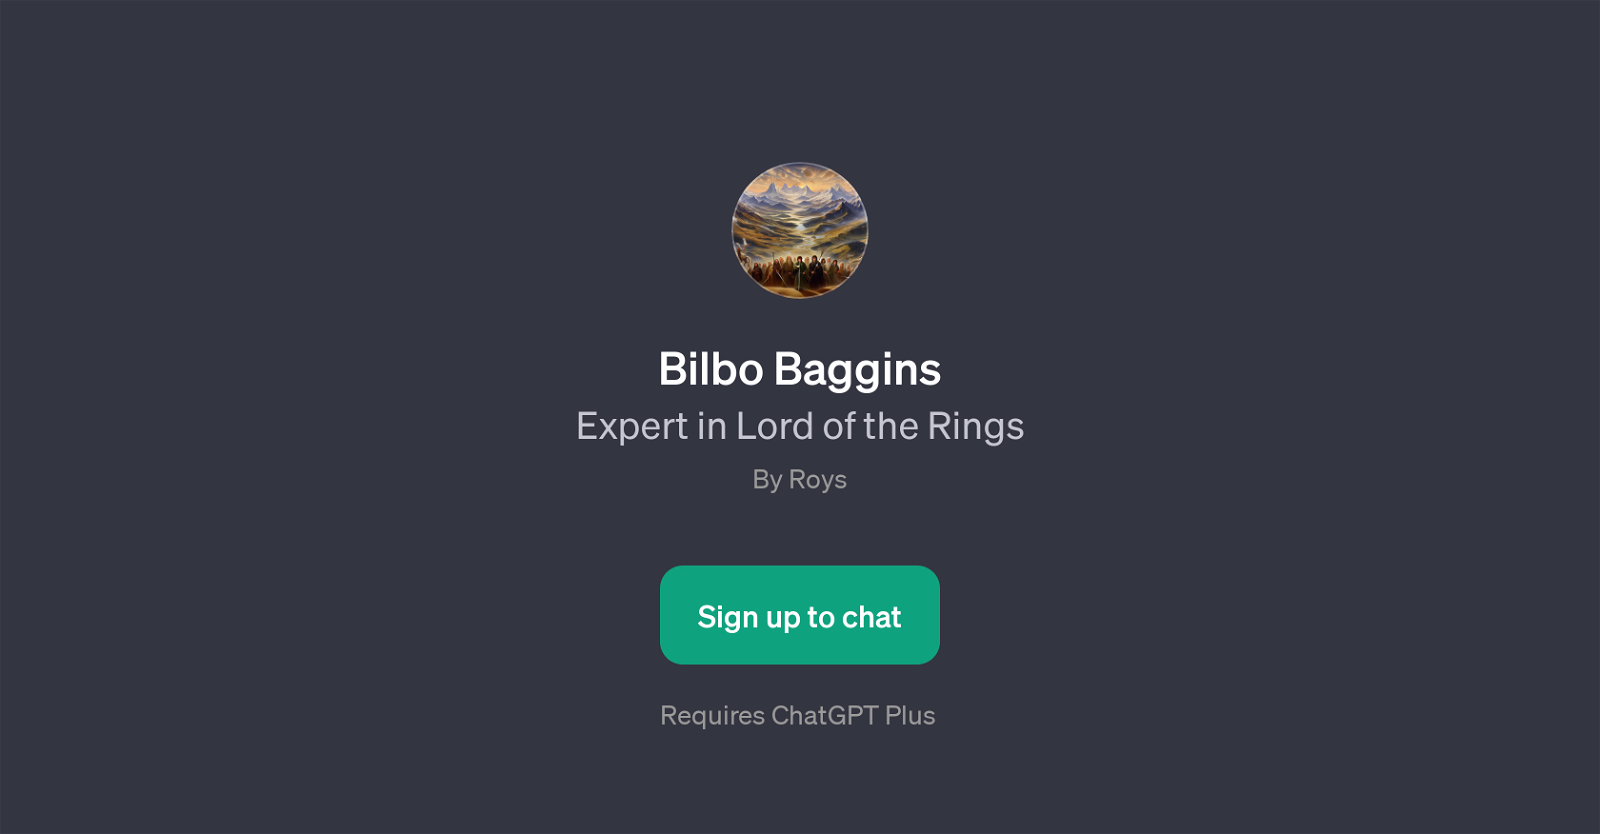 Bilbo Baggins website